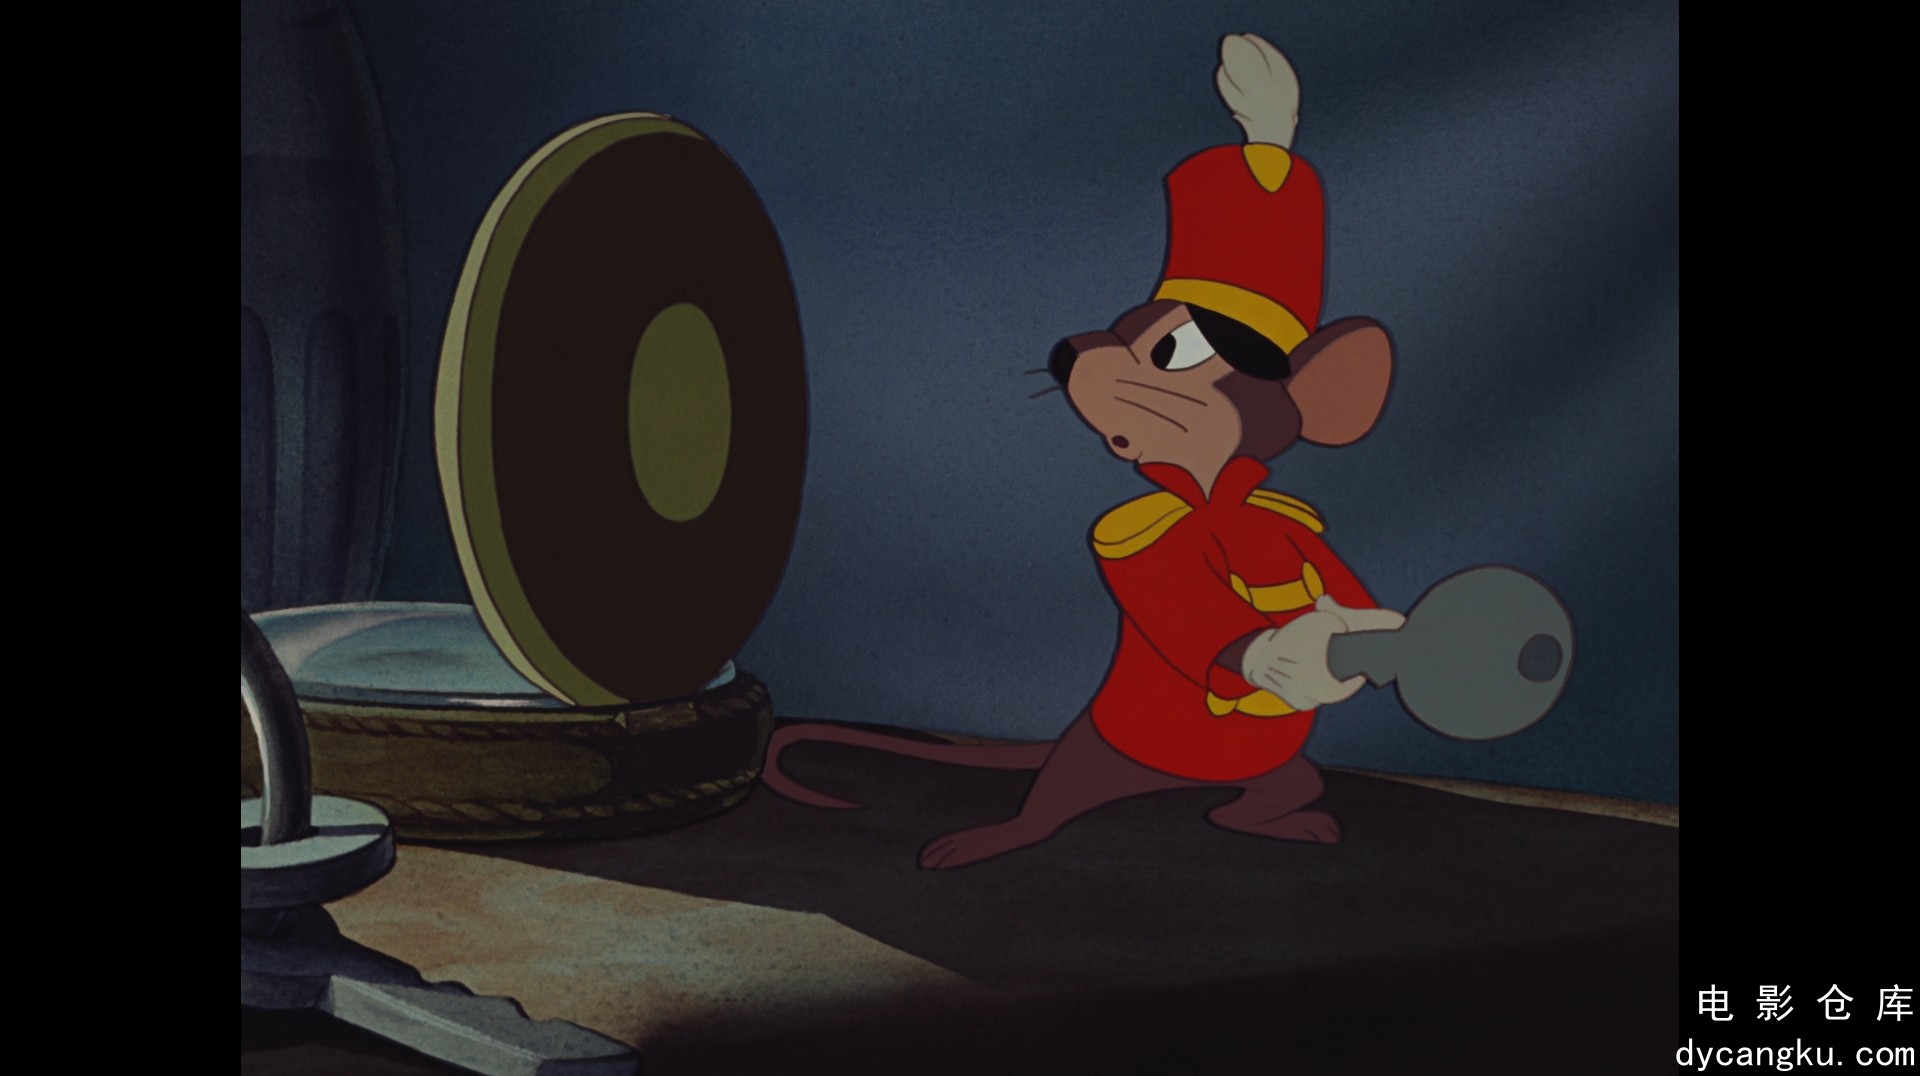 [电影仓库dycangku.com]Dumbo.1941.1080p.BluRay.DTS.x264-RUXi.mkv_snapshot_00.27.17.166.jpg